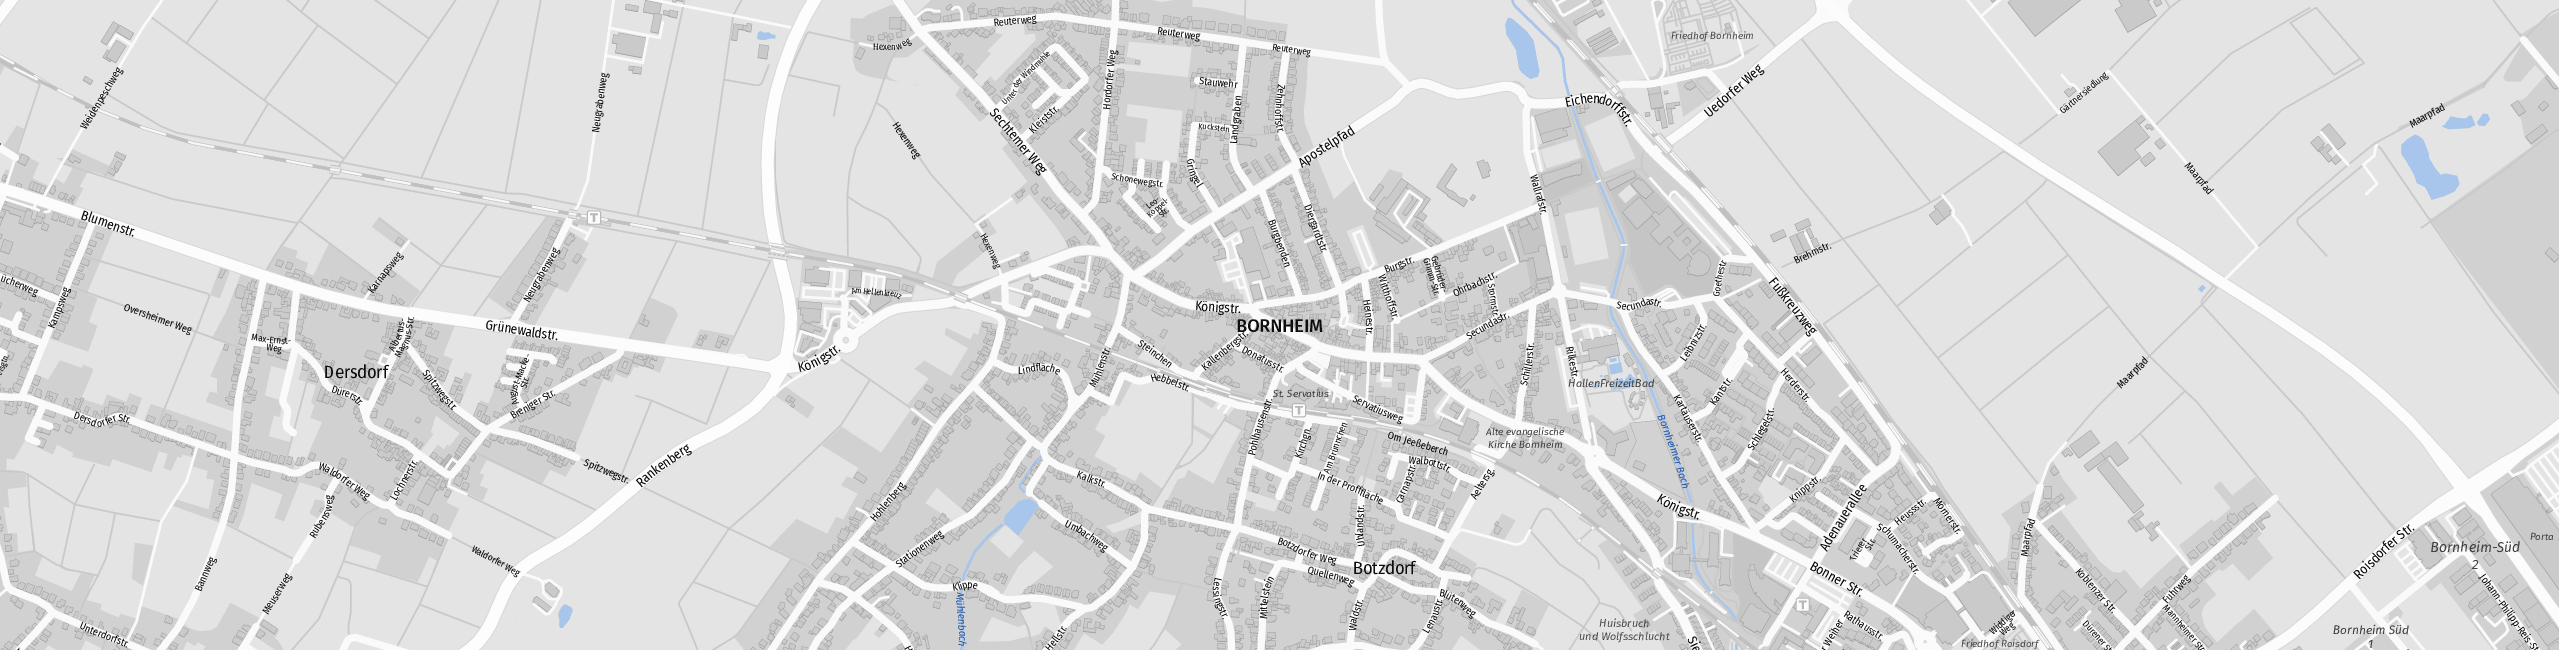 Stadtplan Bornheim zum Downloaden.